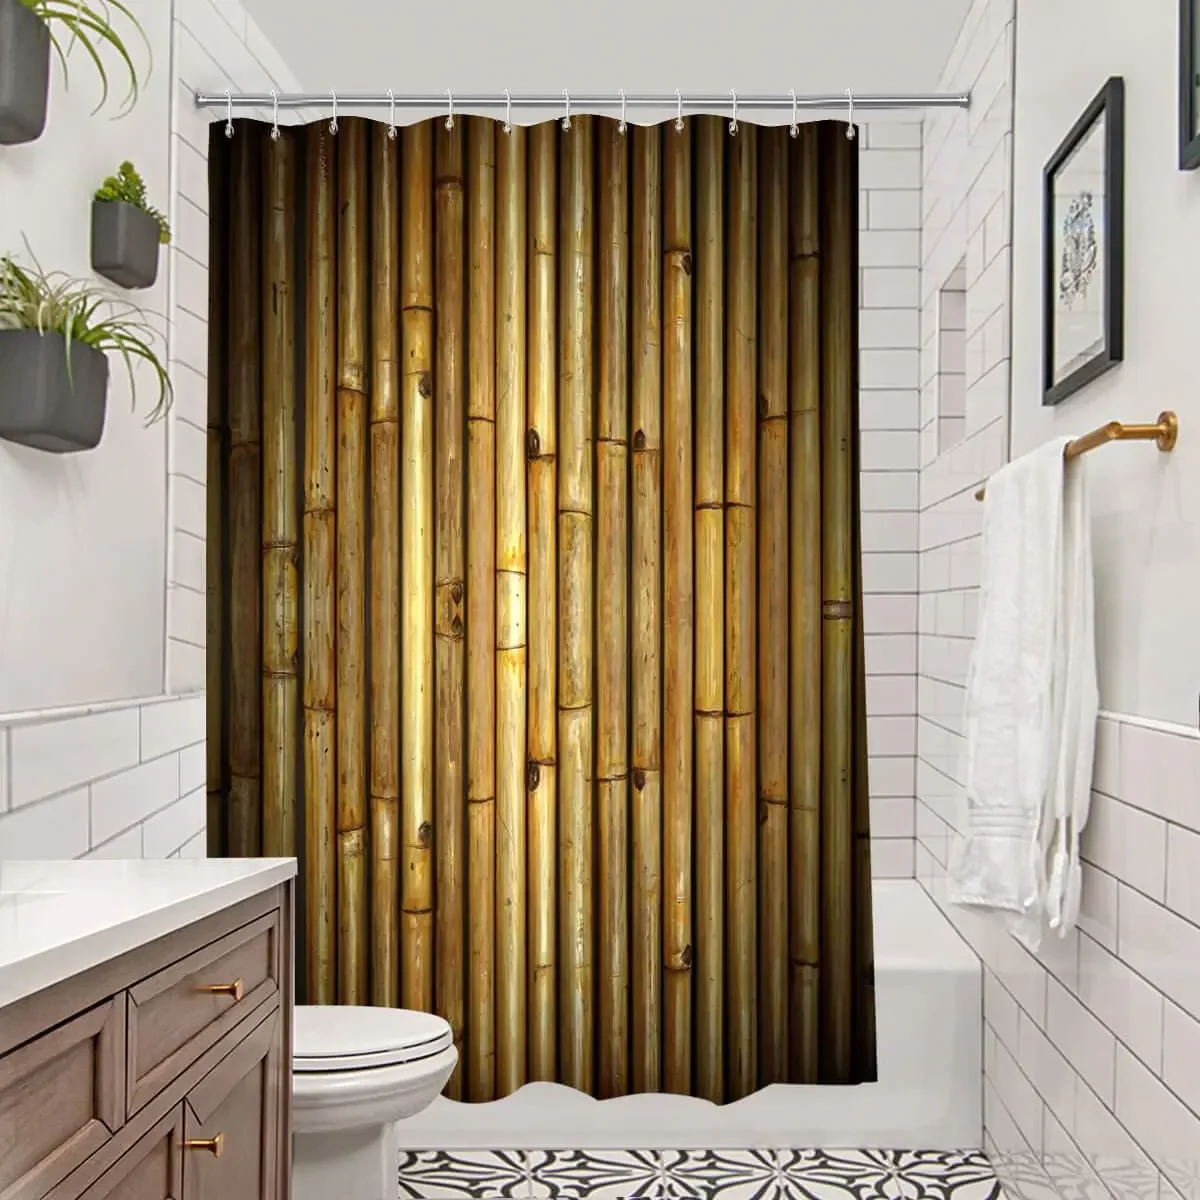 Bamboo Decor Shower Curtain Retro Design Plant Printing Washable Bathroom Curtain Set Brown Tan Beige Bath Accessories With Hook